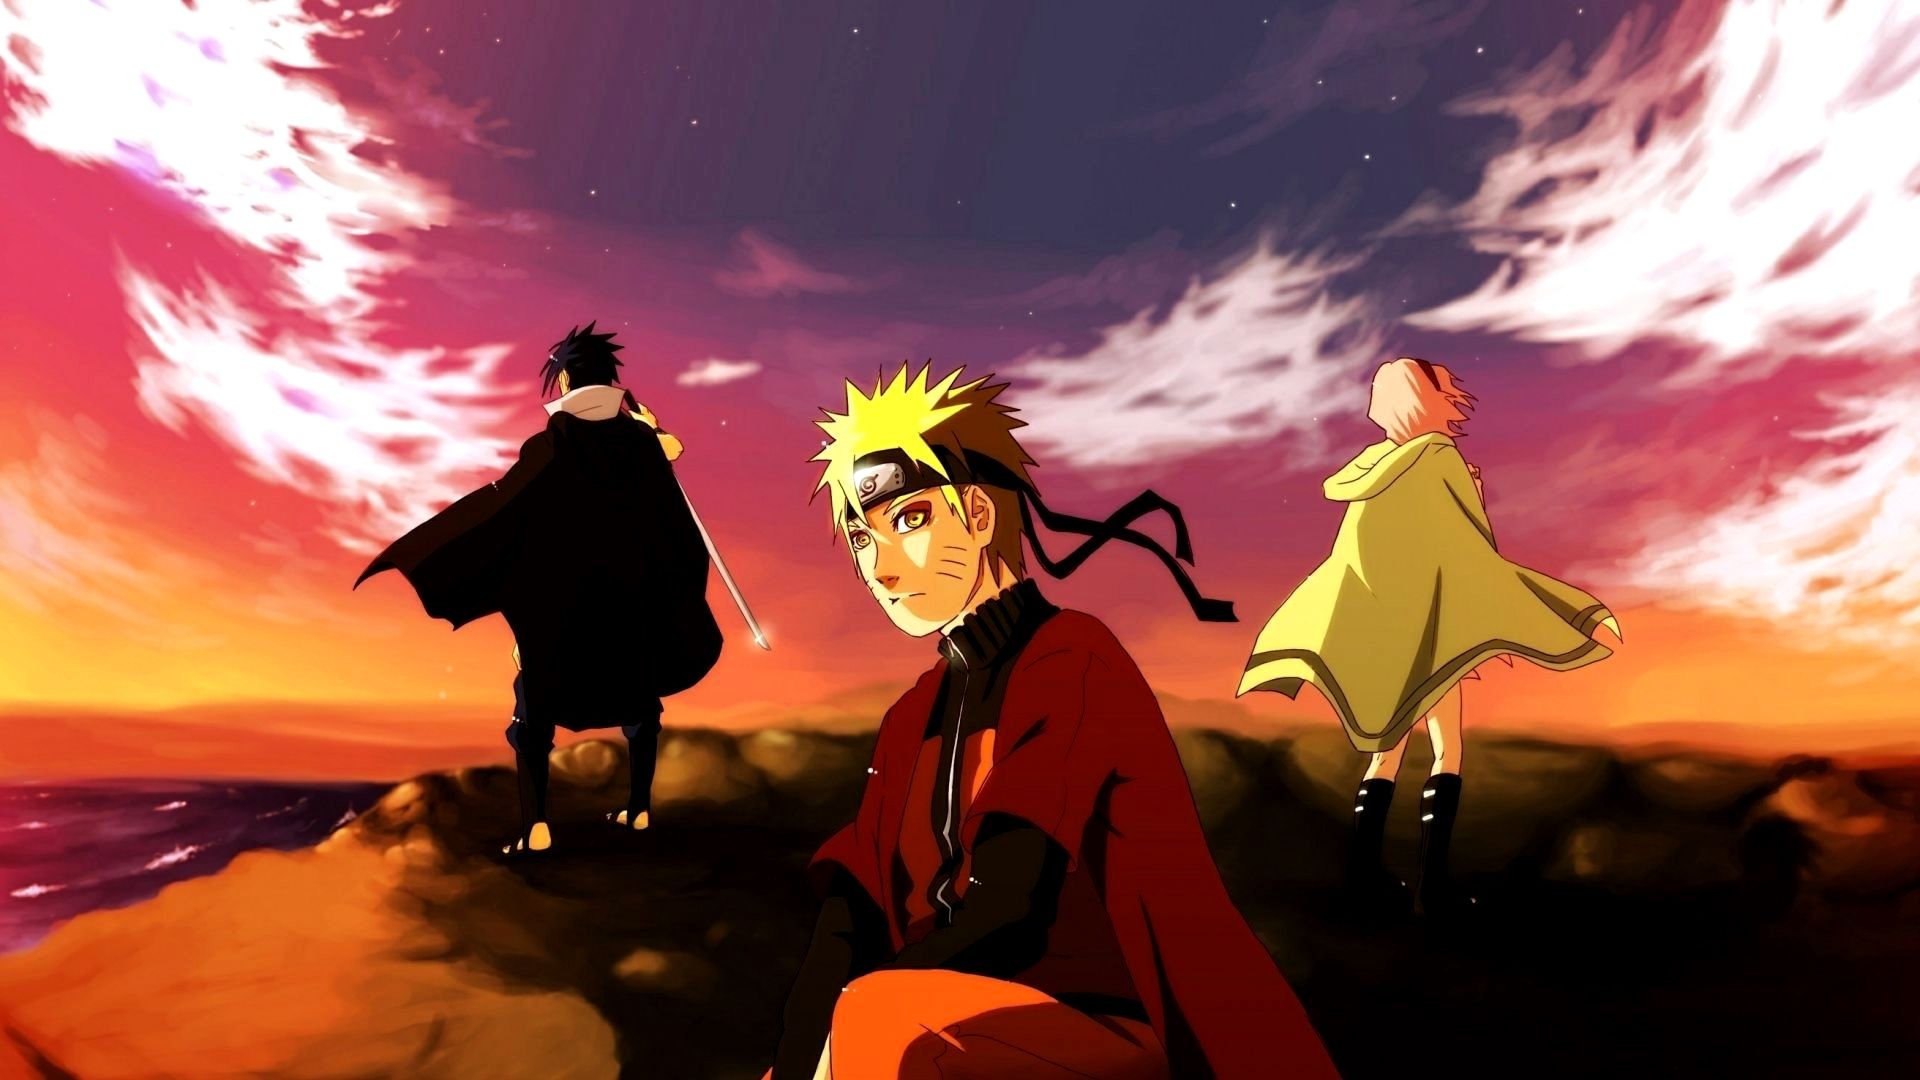 Naruto Wallpaper 4K Pc Download Gallery. Naruto wallpaper, Anime